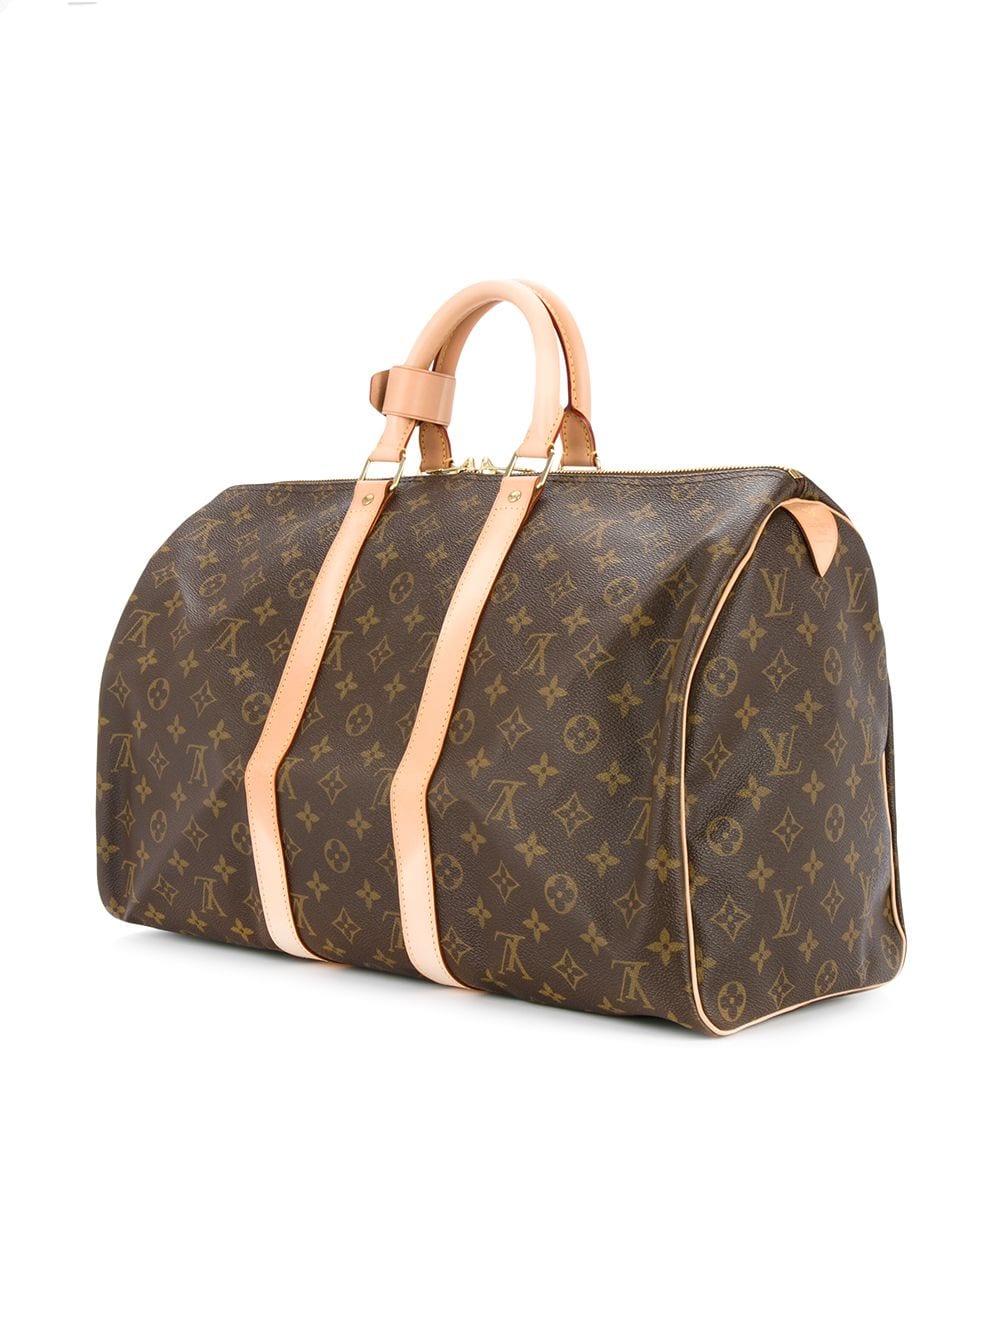 00032400# Authentic Louis Vuitton Travel Bag Keepall 45 Monogram